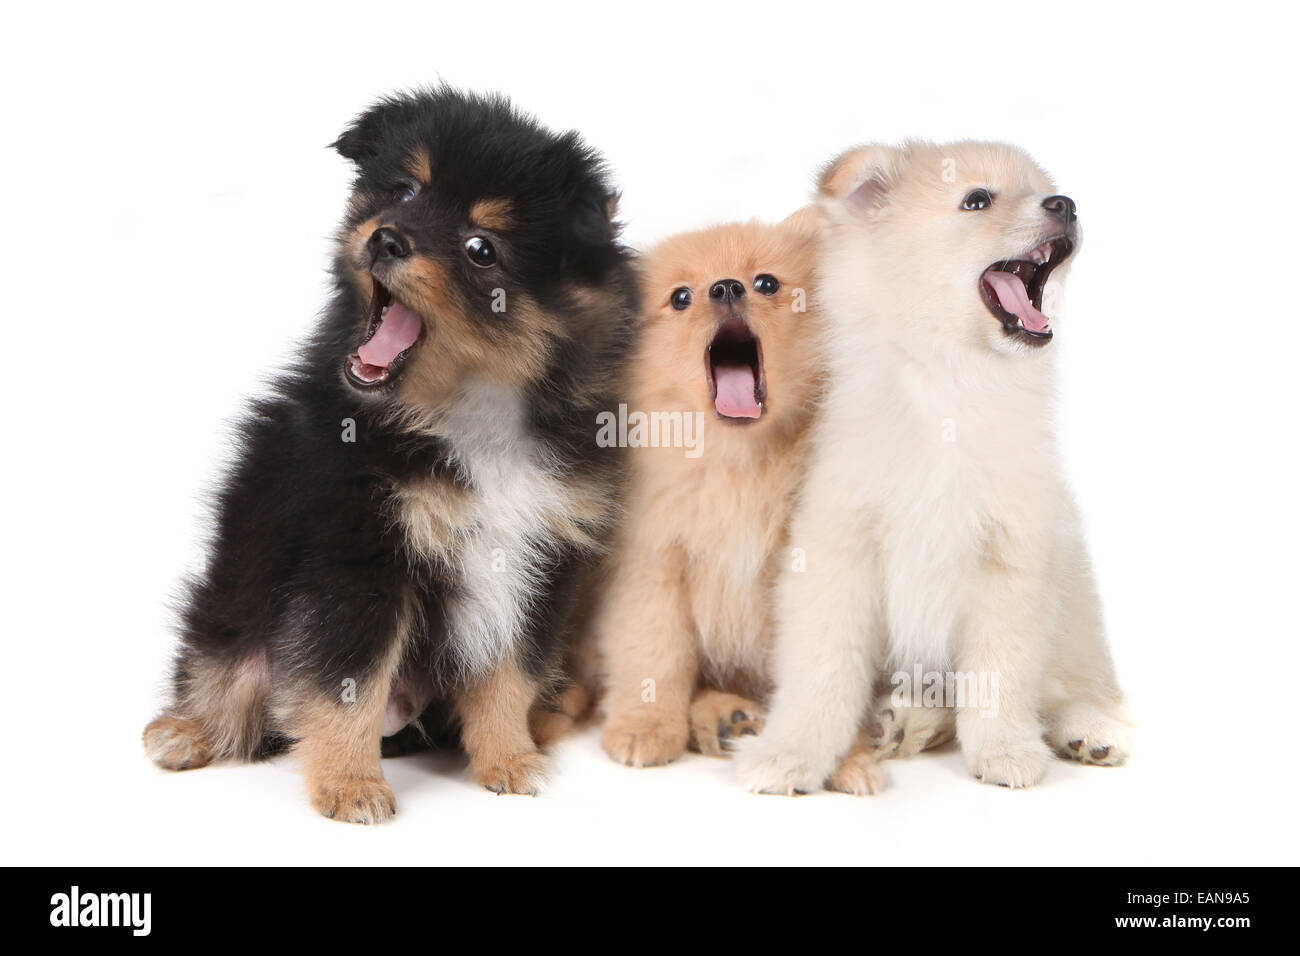 Three Howling Singing Pomeranian Puppies on White Background Stock Photo